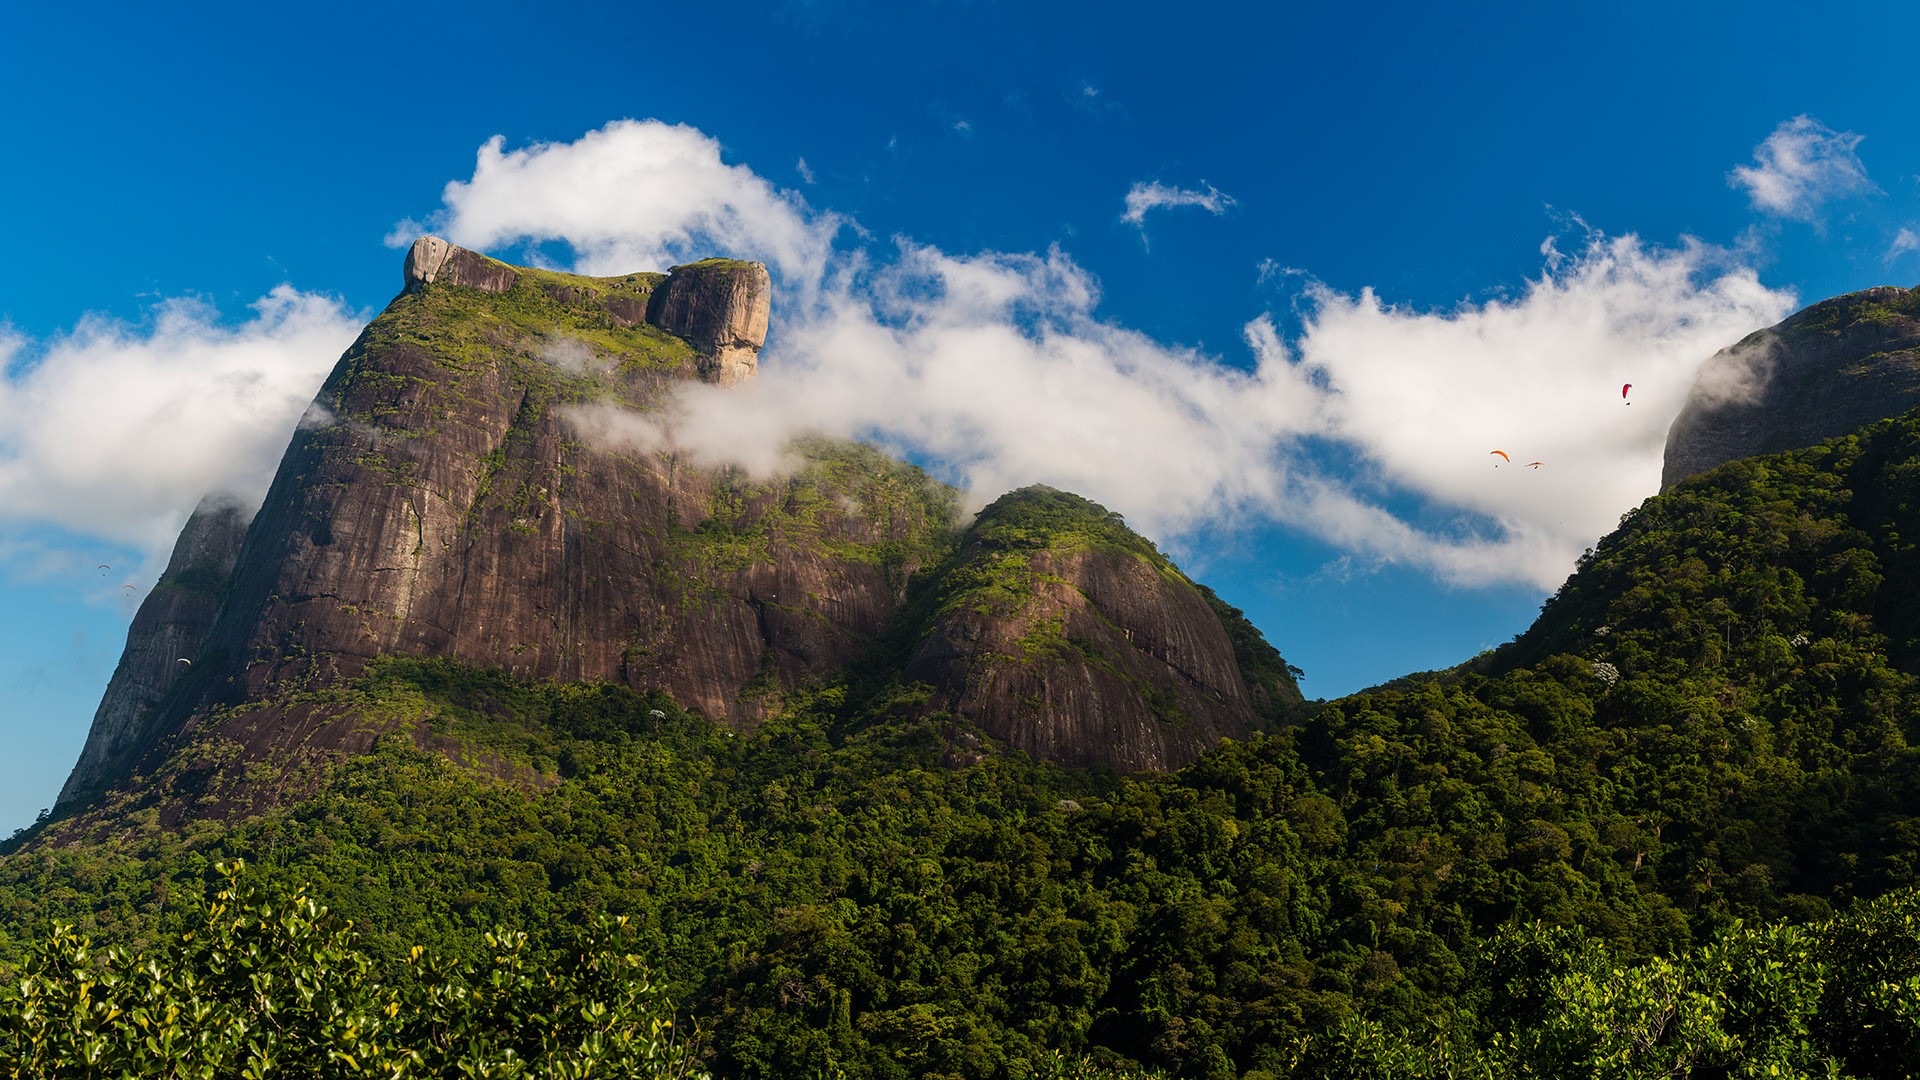 General 1920x1080 nature landscape mountains rocks trees forest clouds paragliding national park Rio de Janeiro Brazil